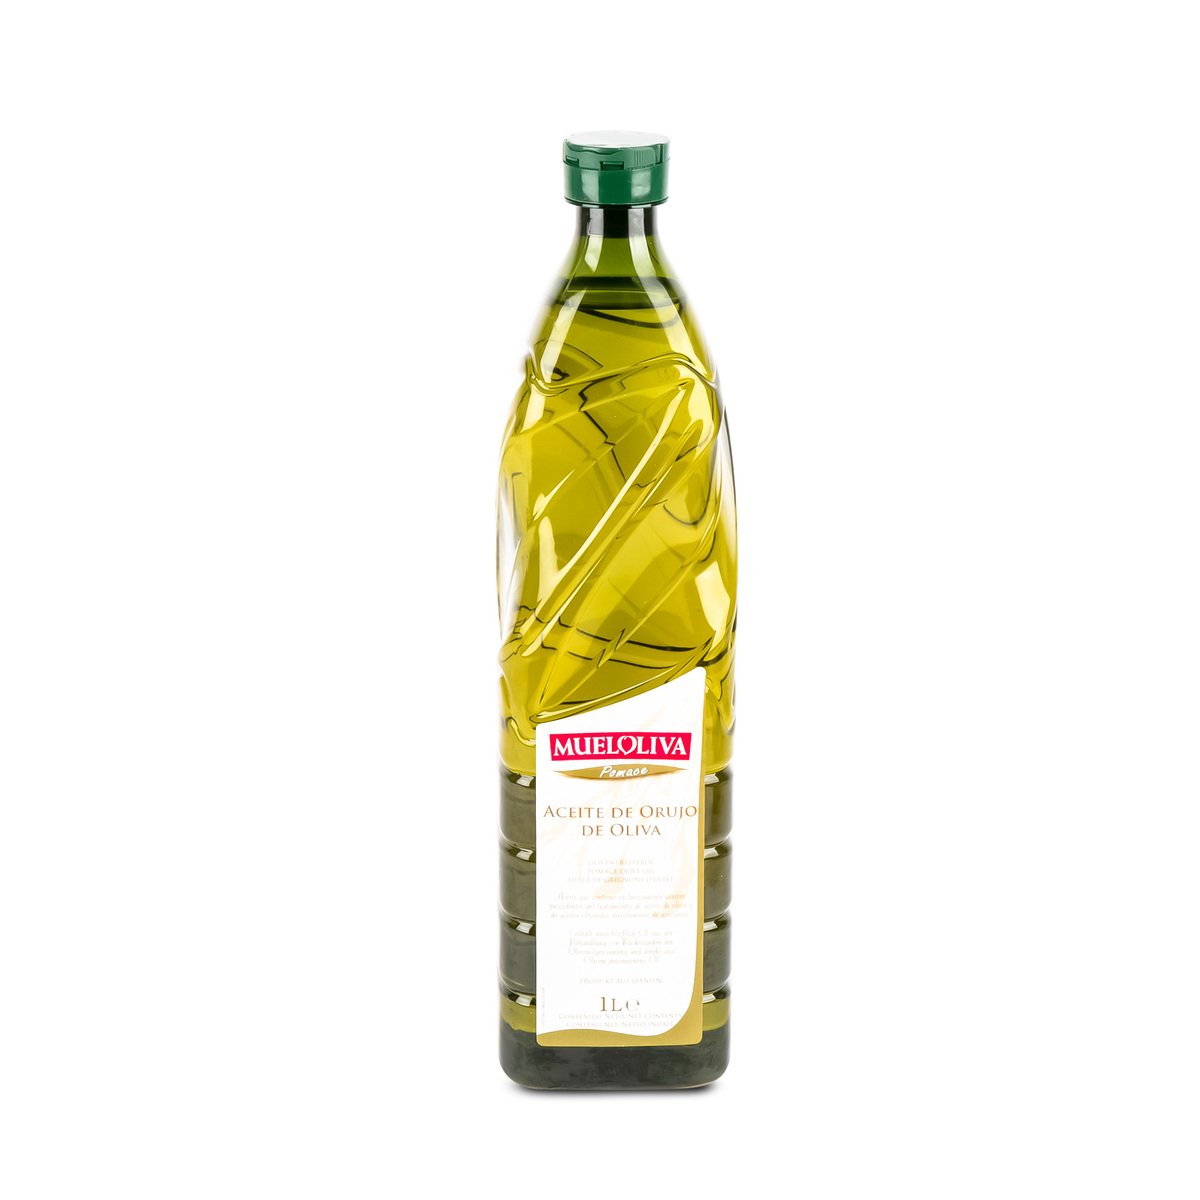 Mueloliva Pomace Olive Oil 1Litre